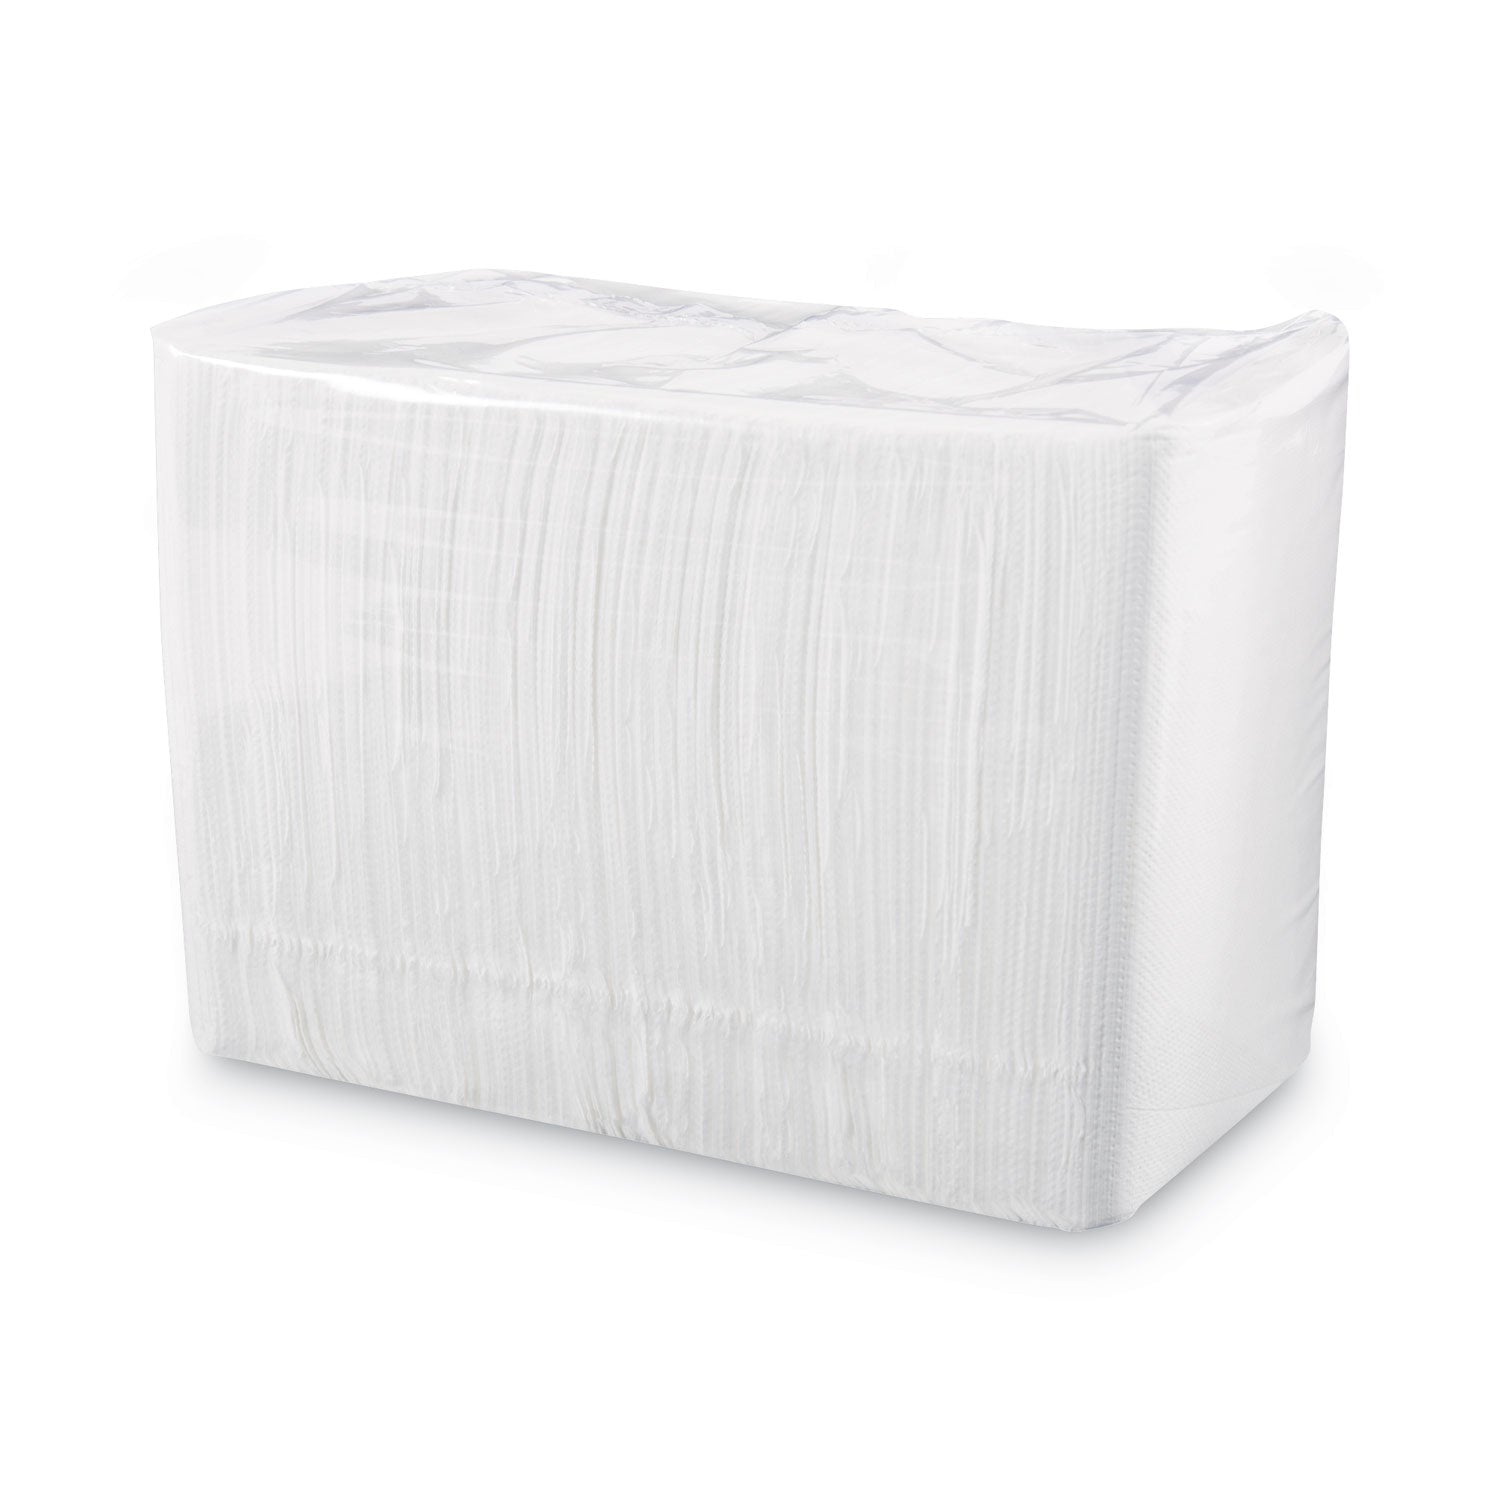 1-4-fold-lunch-napkins-1-ply-12-x-12-white-6000-carton_bwk8310w - 2